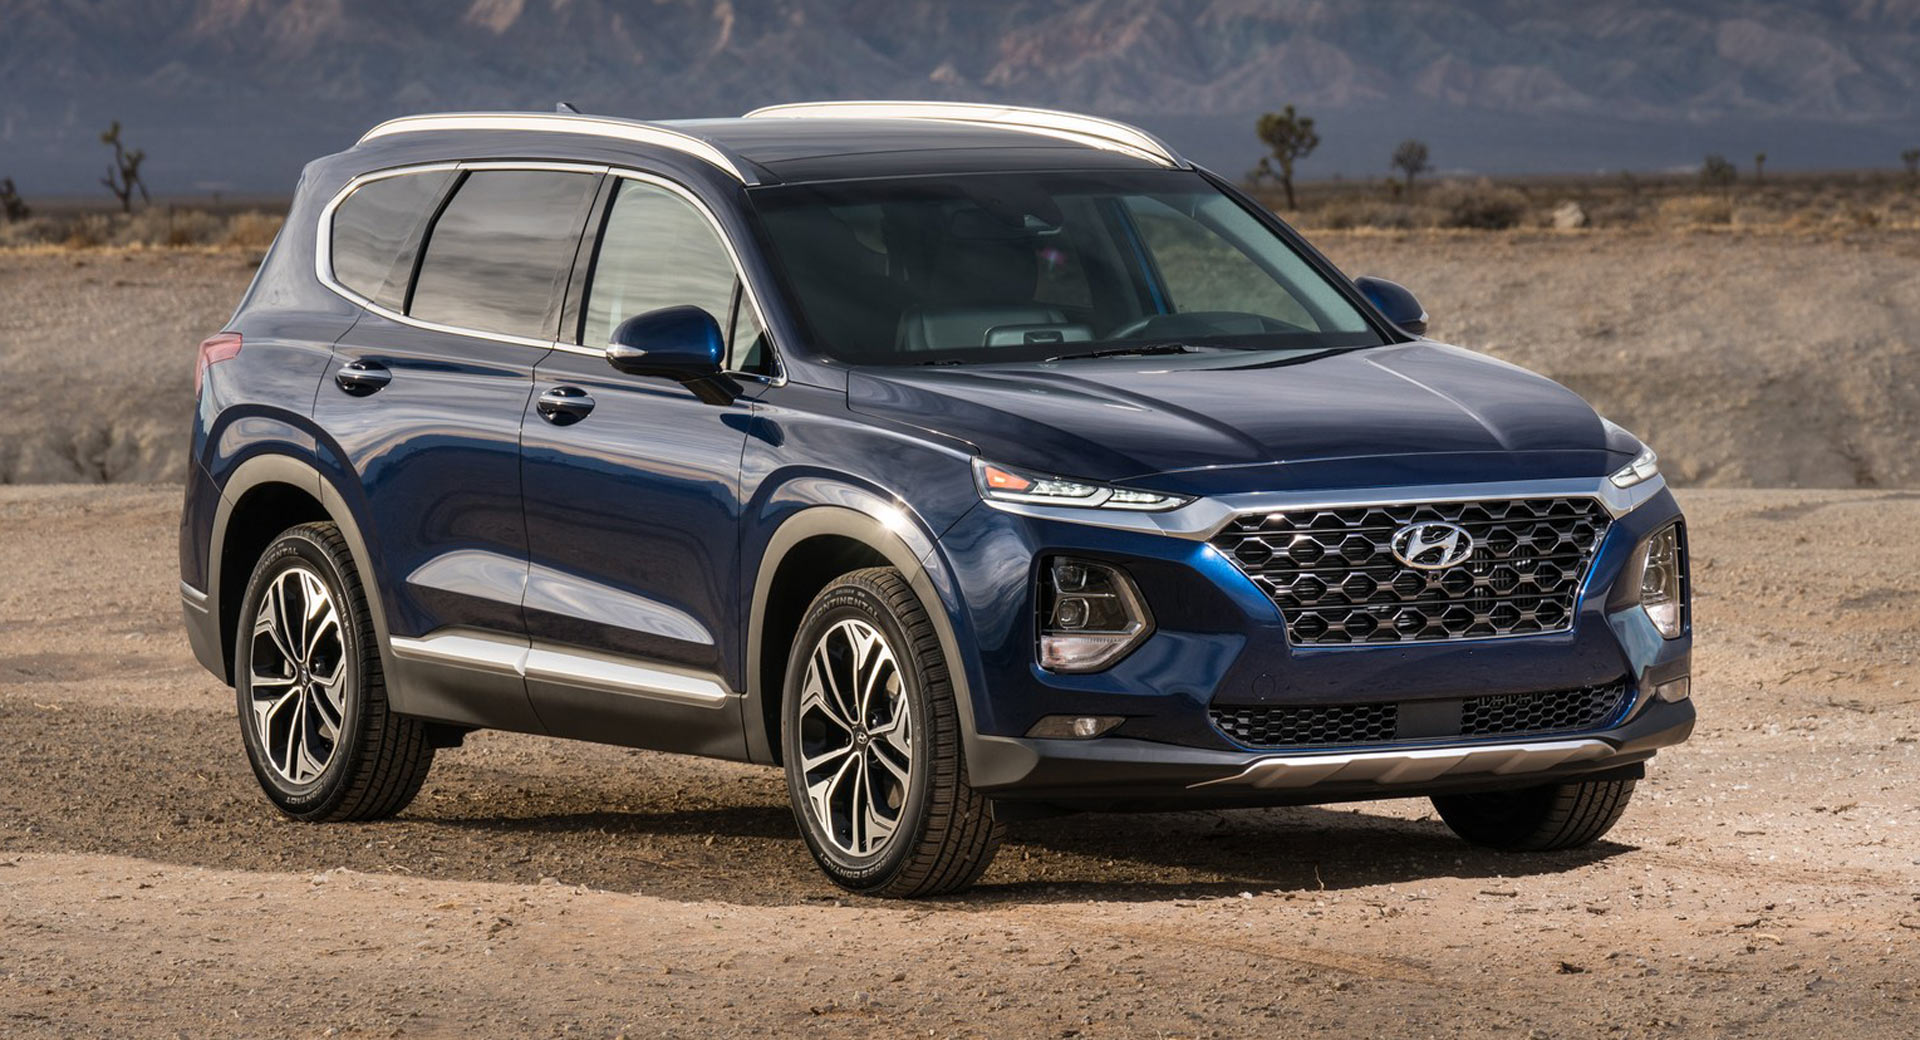 New Hyundai Santa Fe Can Be Unlocked, Started With Fingerprint, But ...